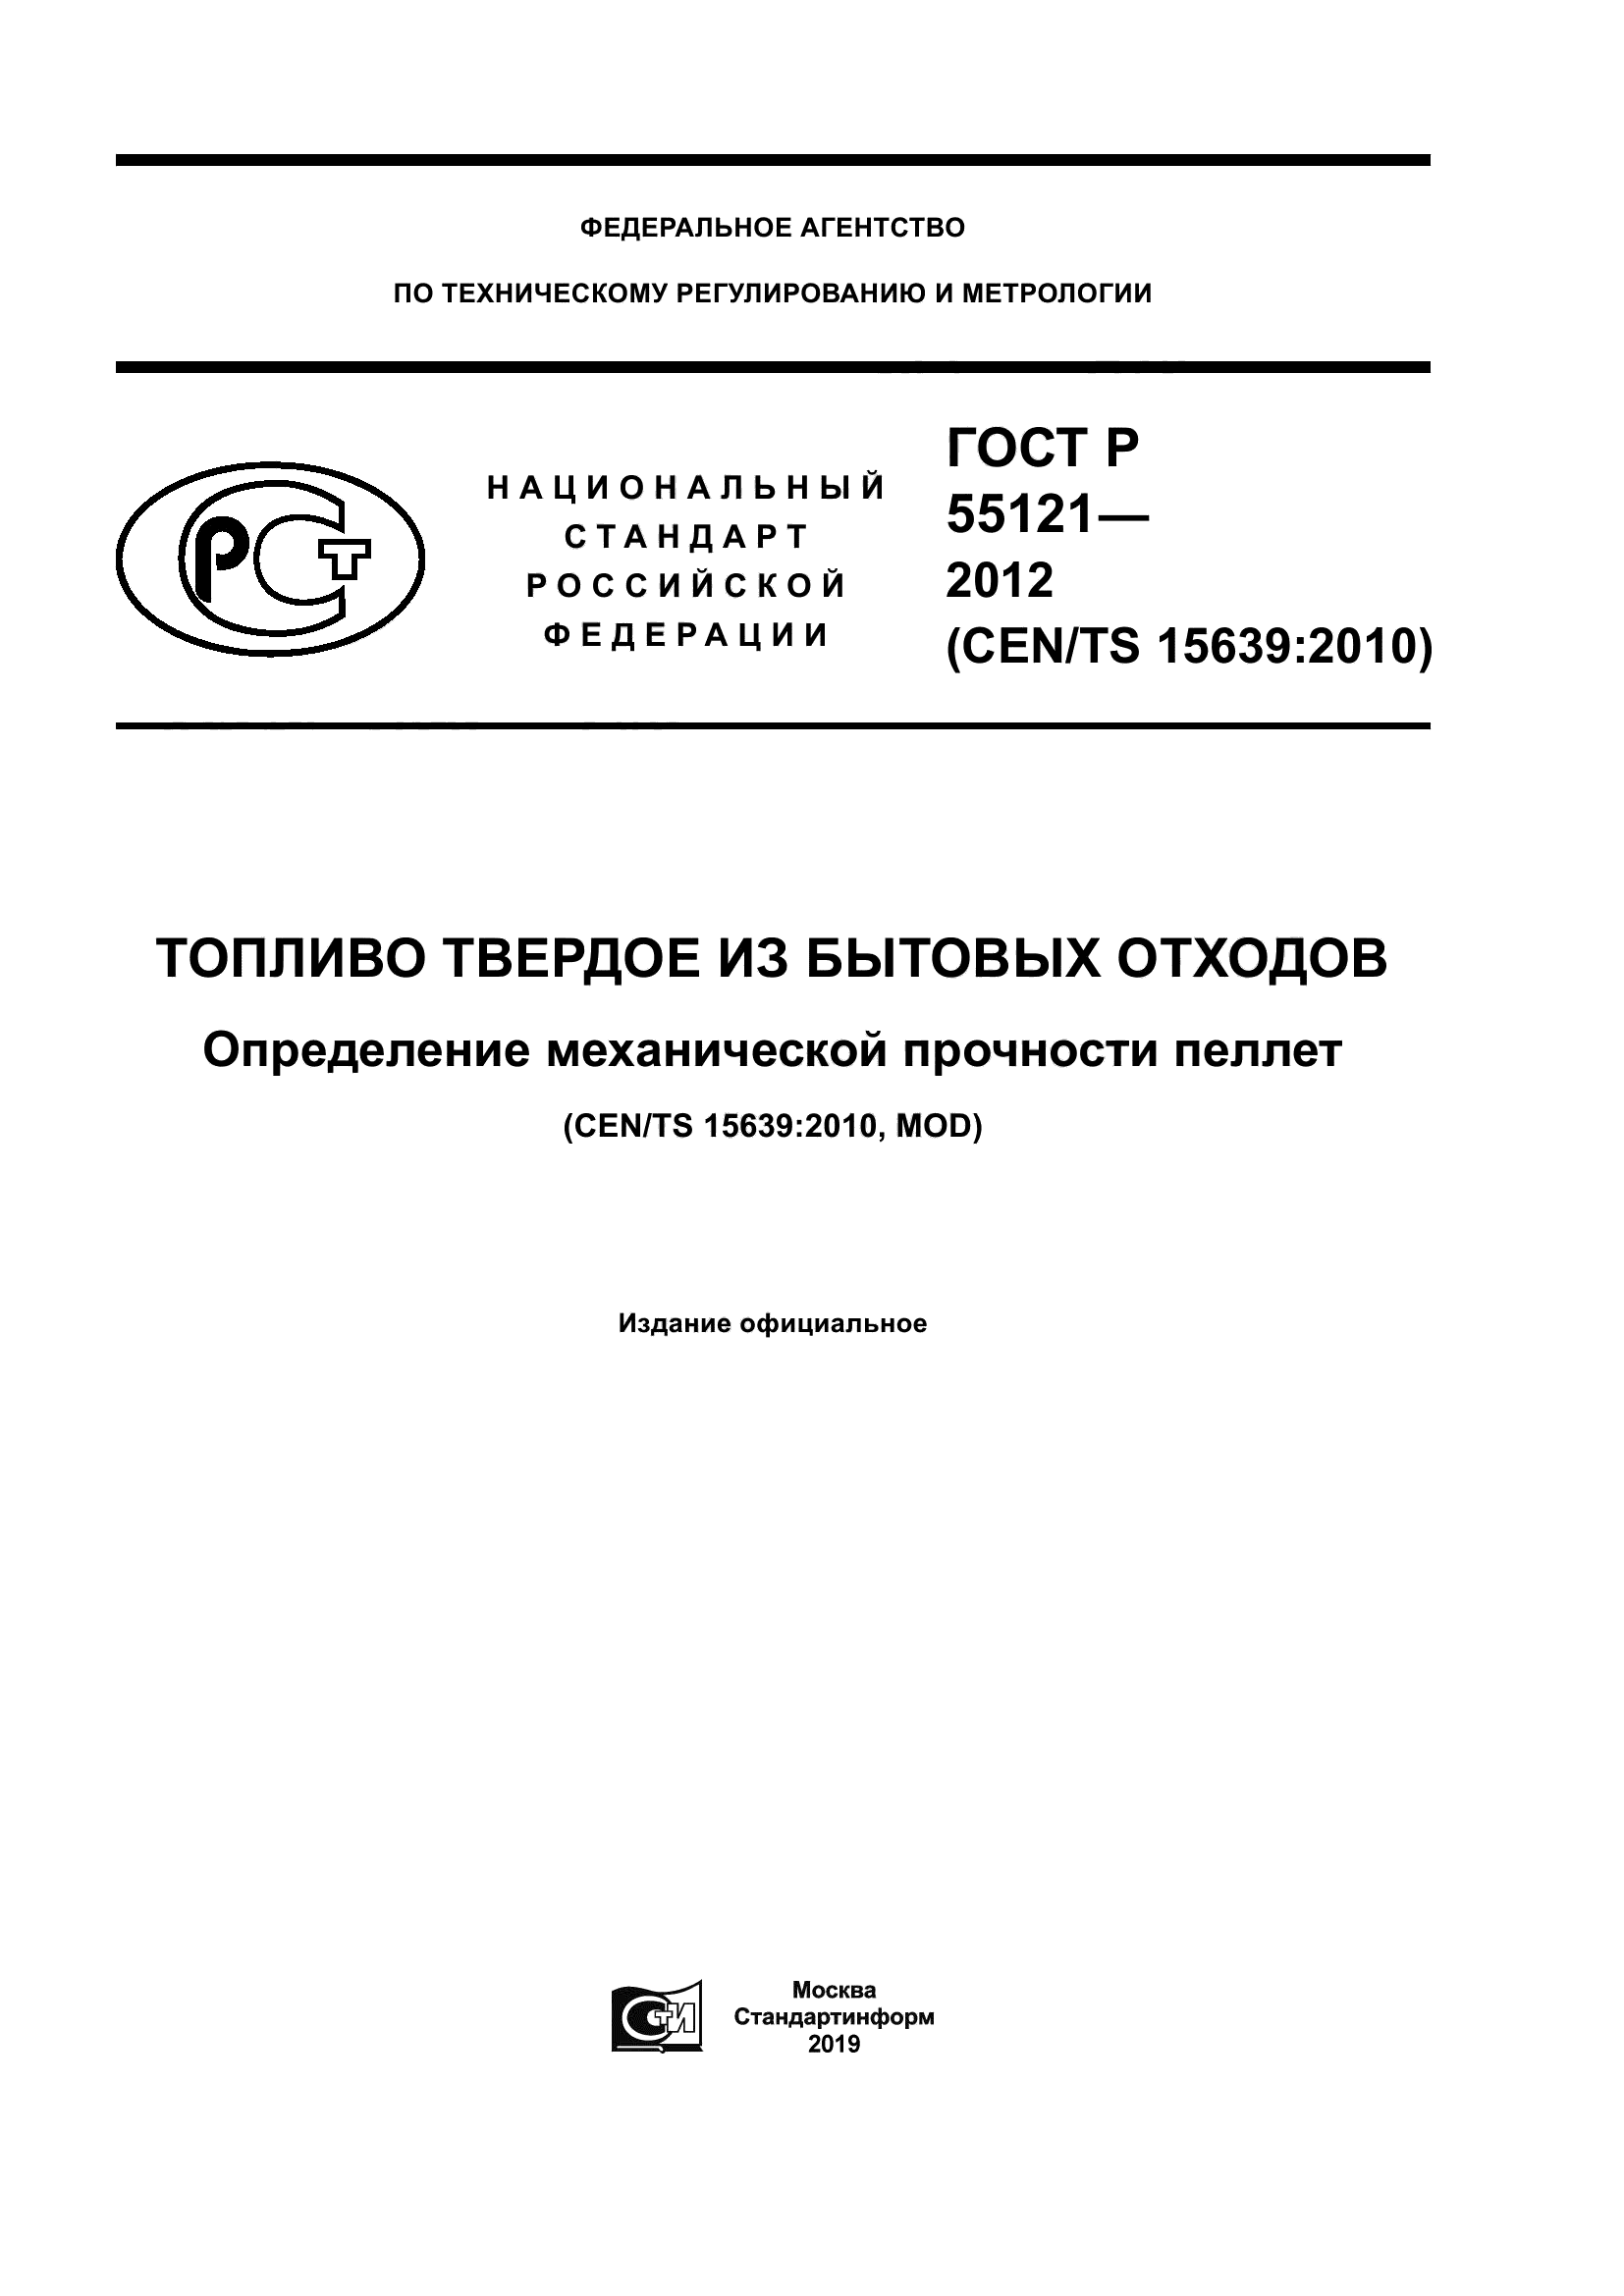 ГОСТ Р 55121-2012